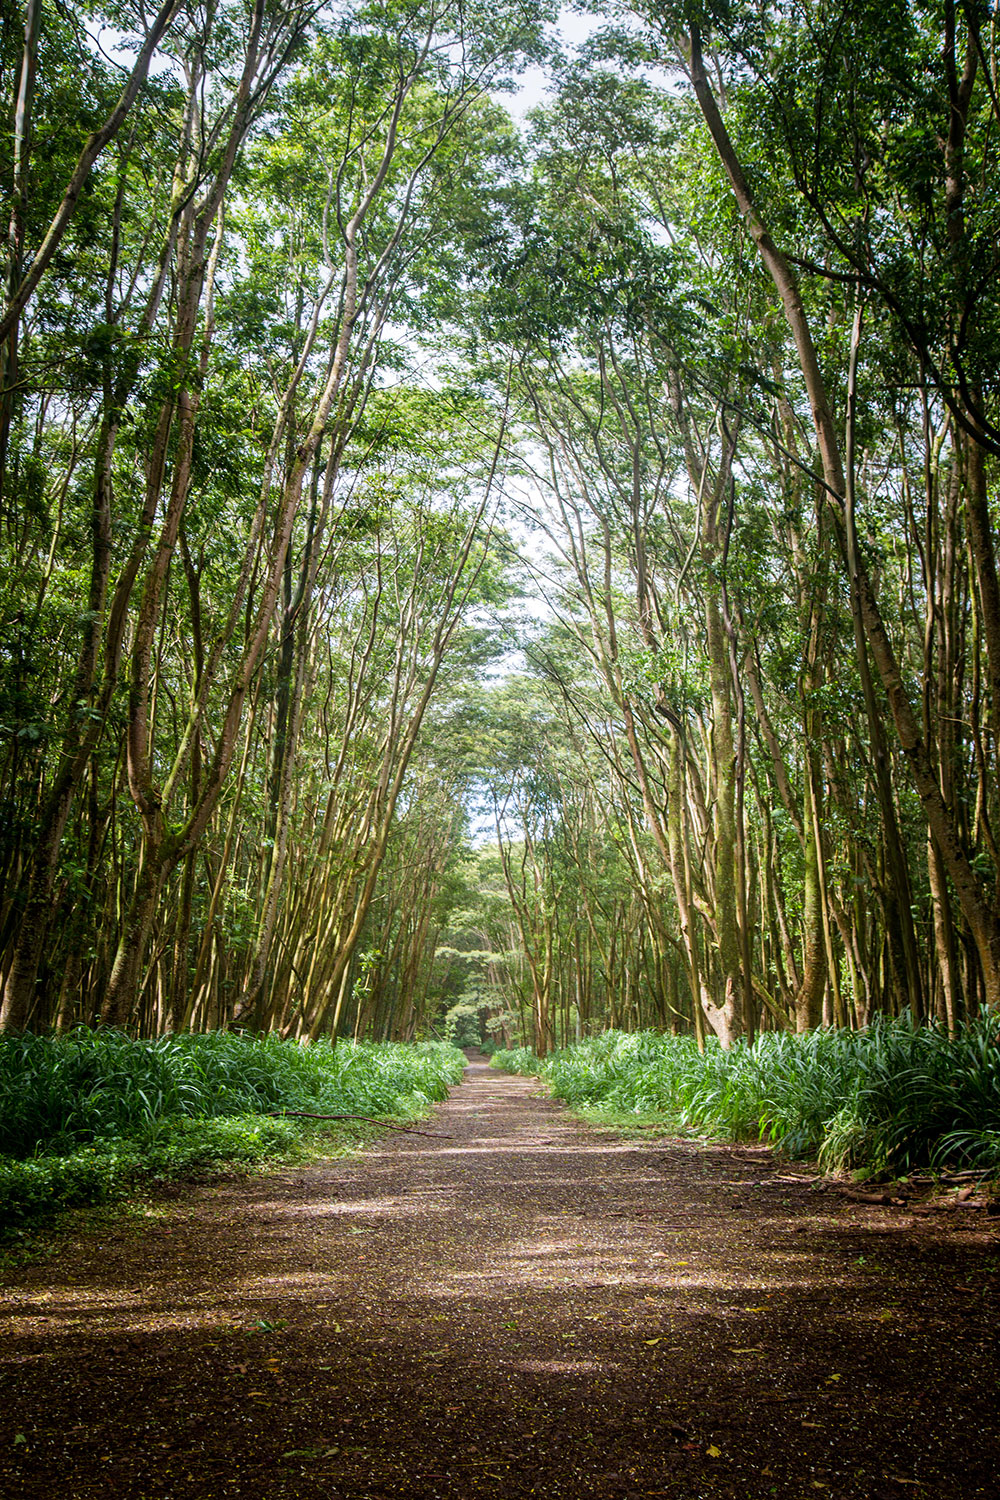 Trees in Kauai by Cherie Carter